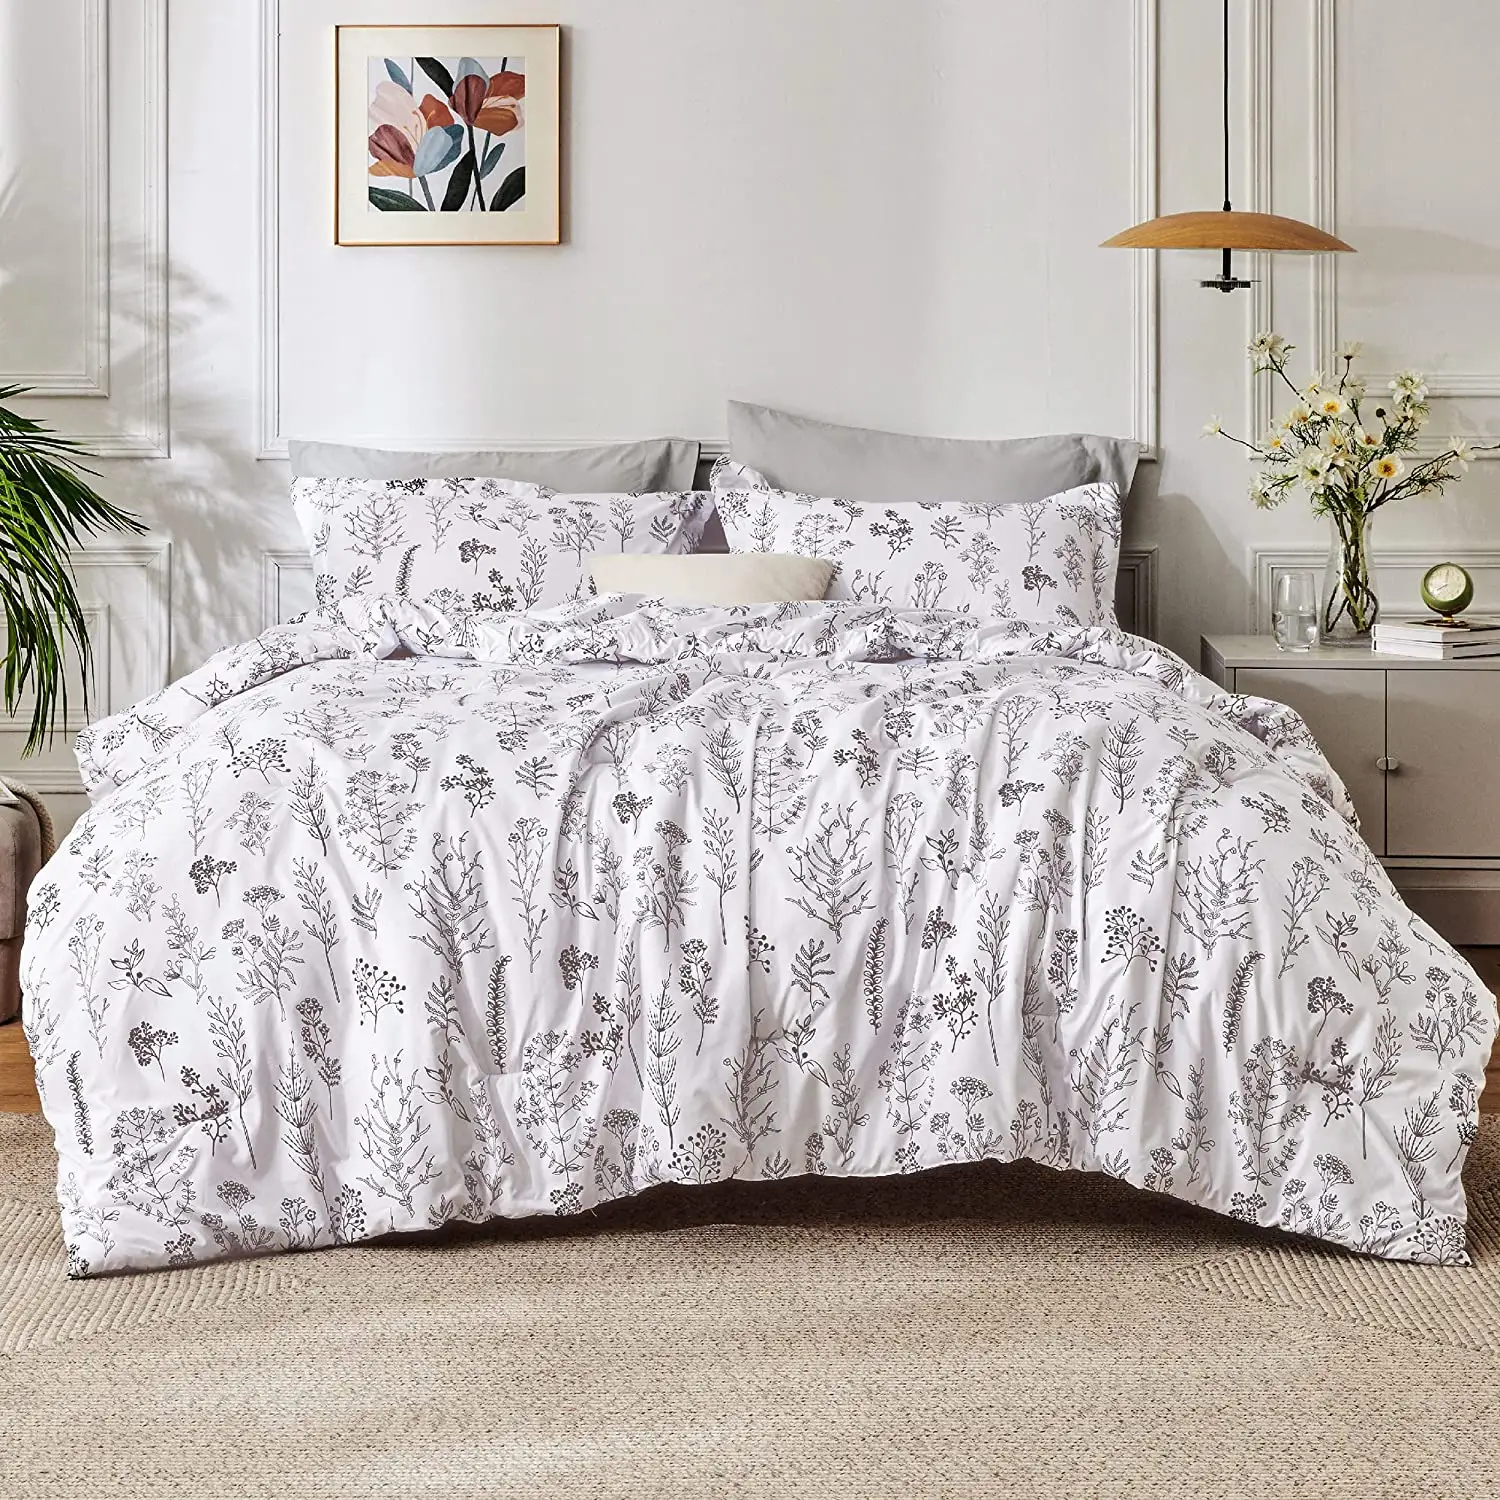 White Comforter Set Queen Floral Botanical Bedding Comforter Sets 4 Pieces Cute Flowers Lightweight Soft Bed Set